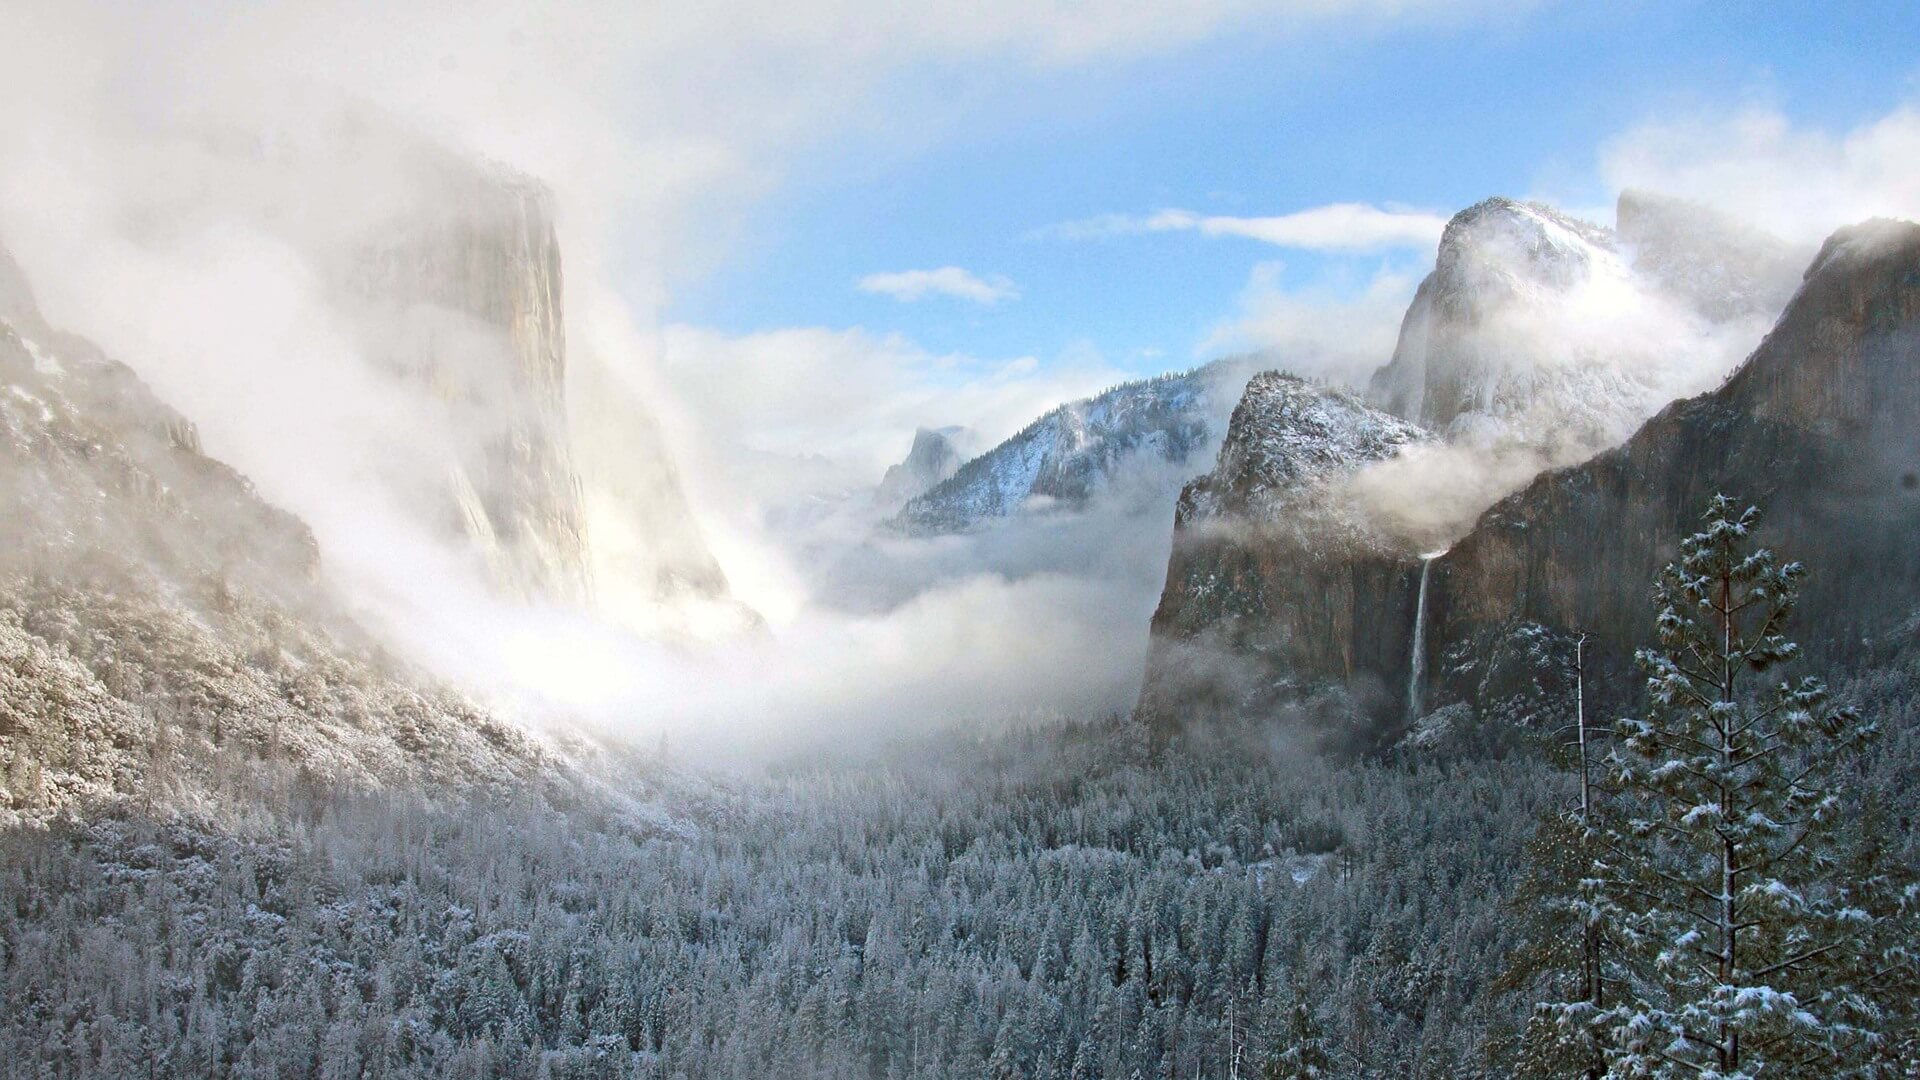 Yosemite National Park in Winter